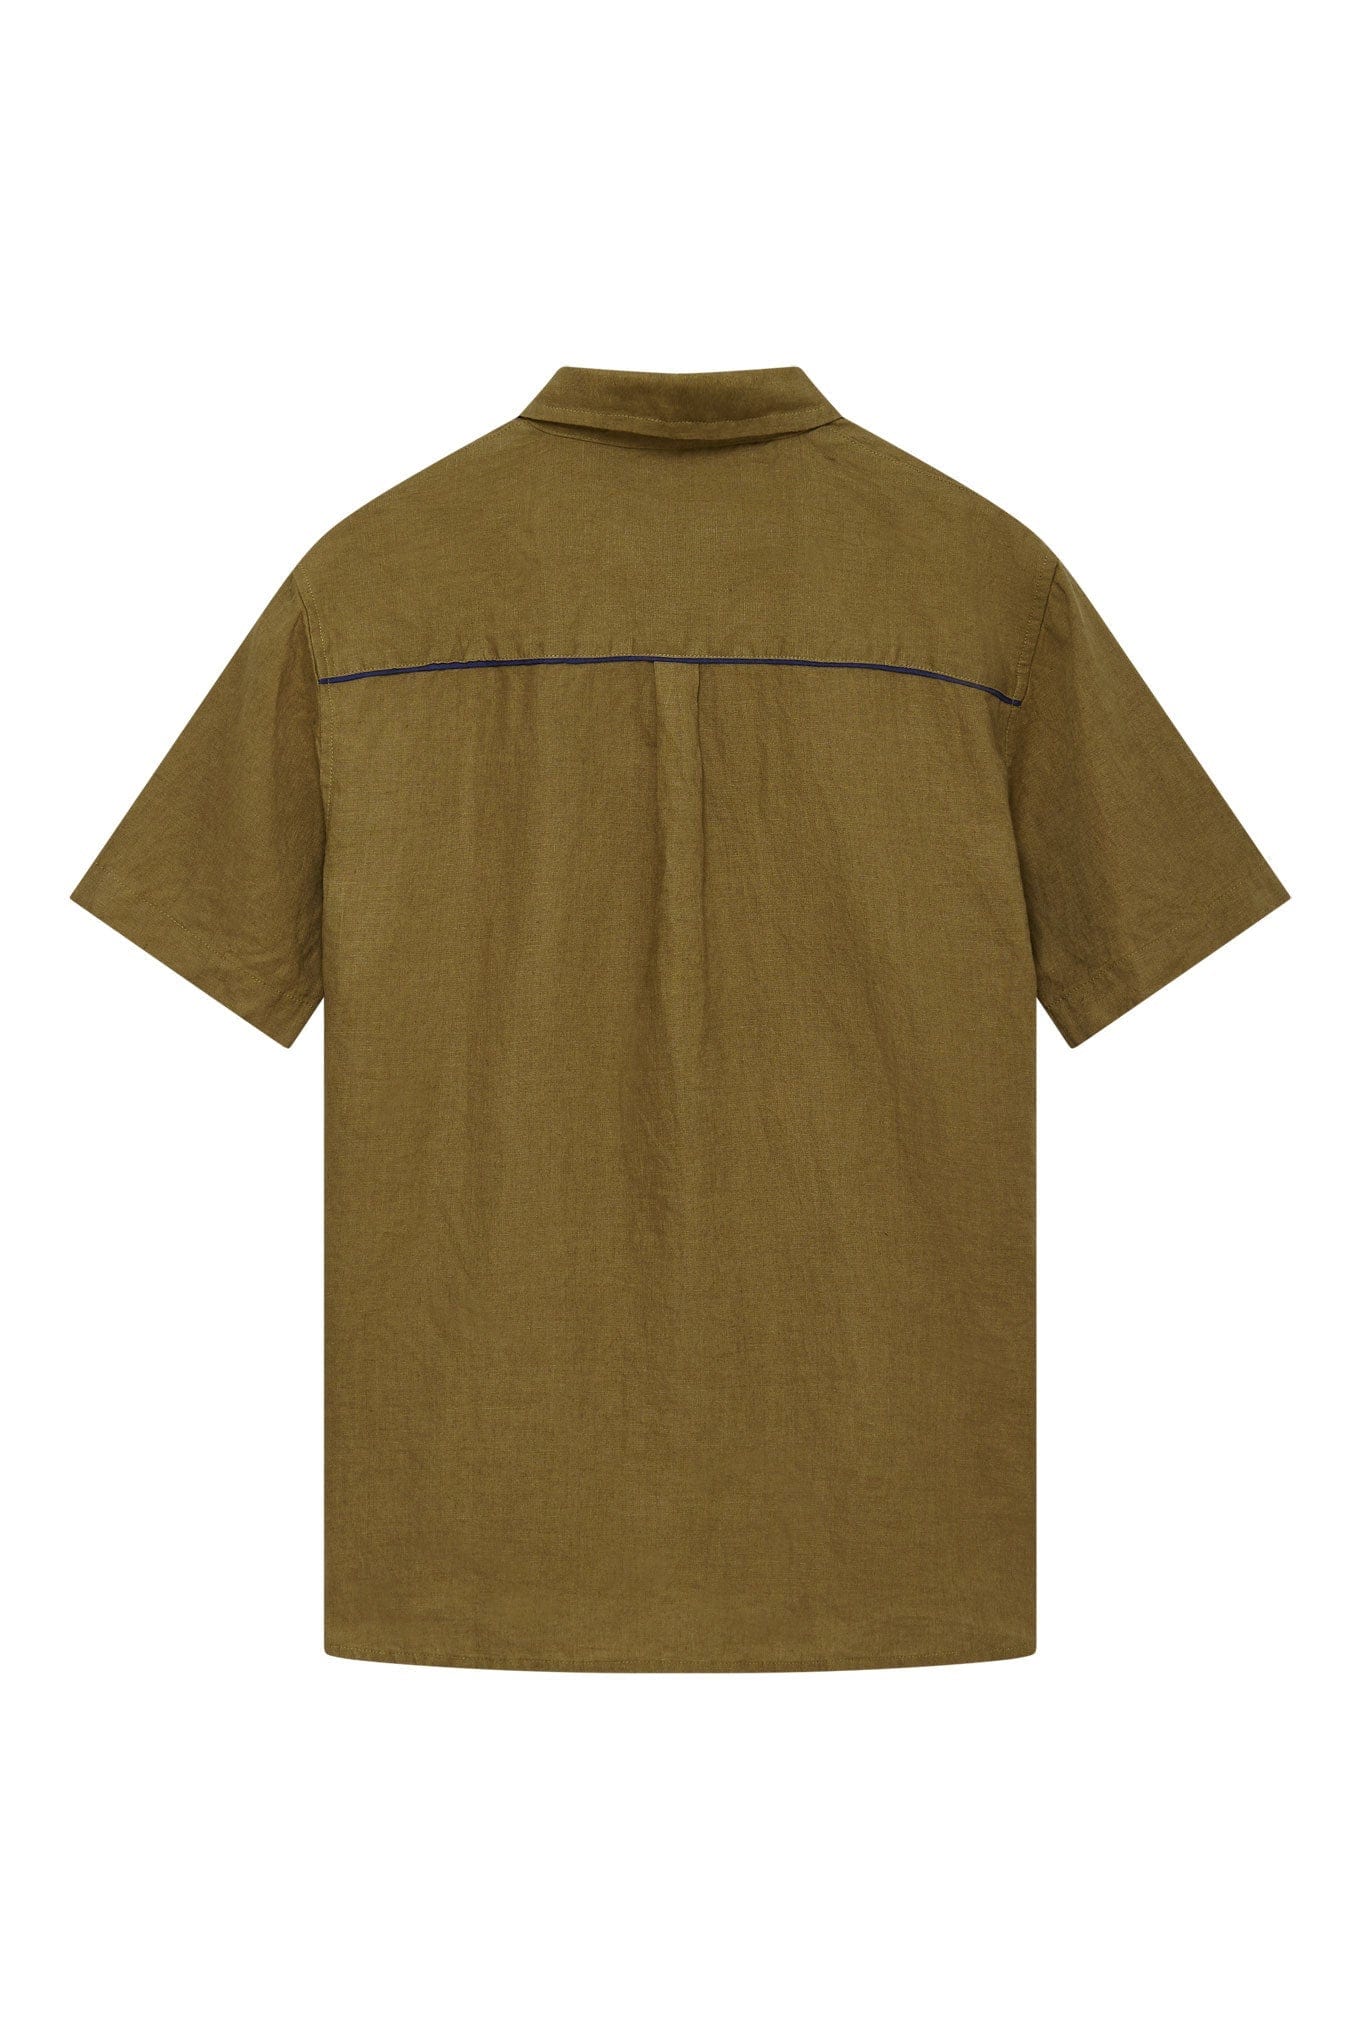 KOMODO DINGWALLS - Linen Shirt Khaki